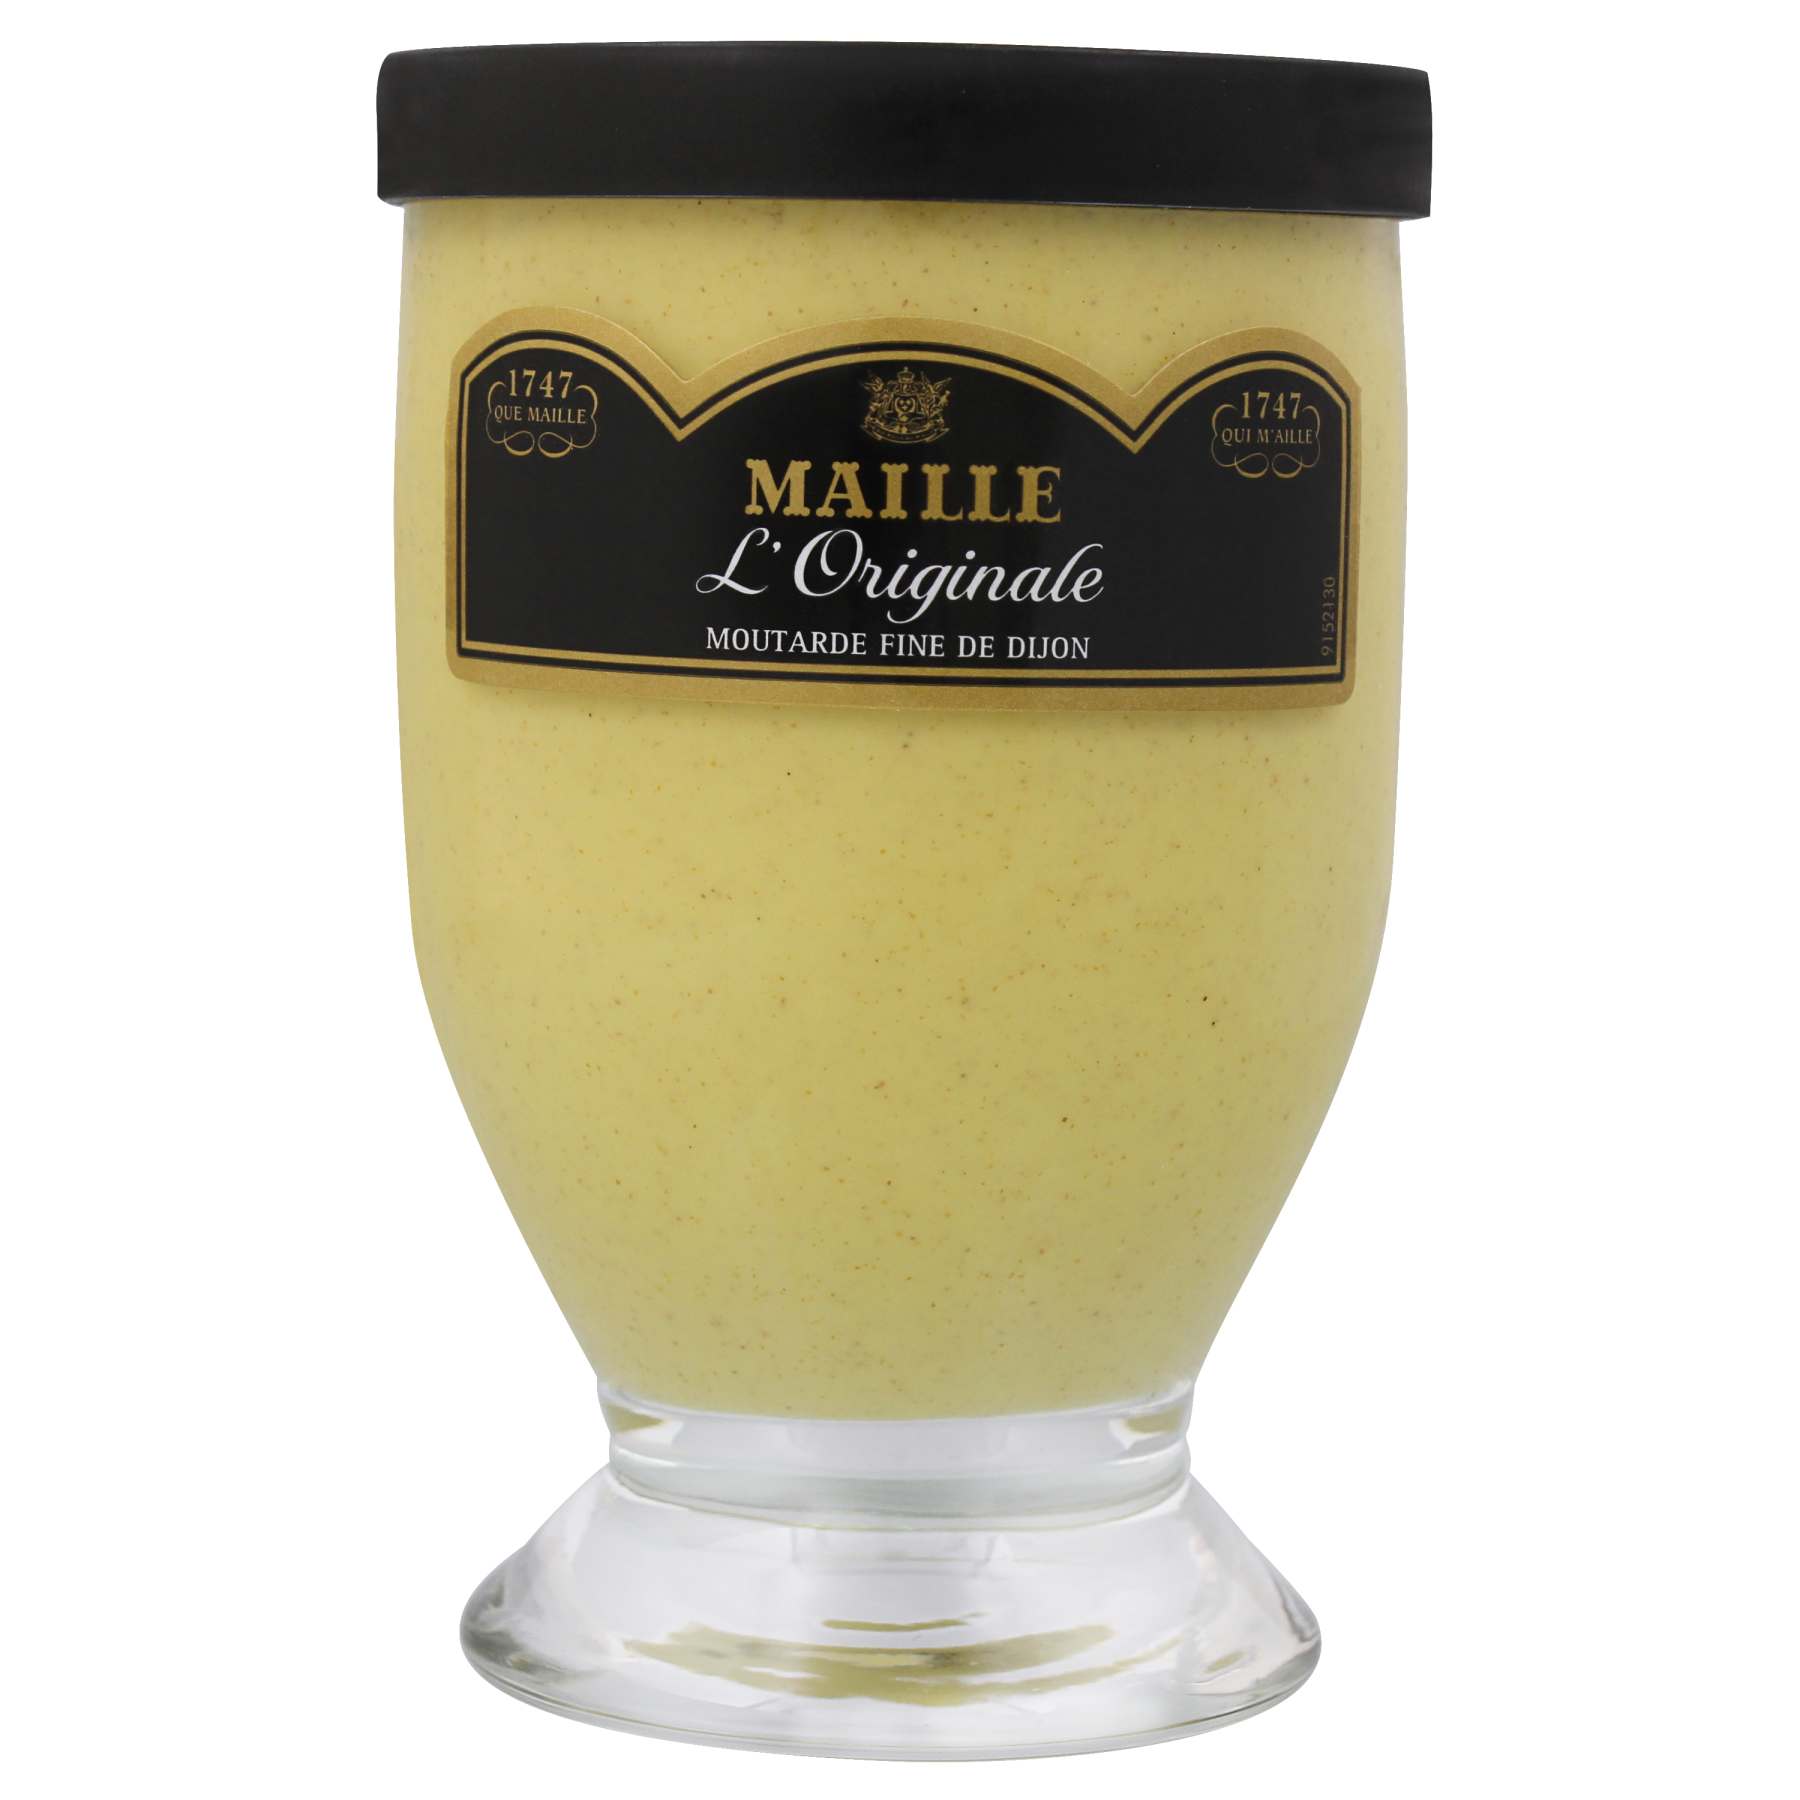 Maille - L'Originale Moutarde Fine De Dijon Verre 215 g, overview